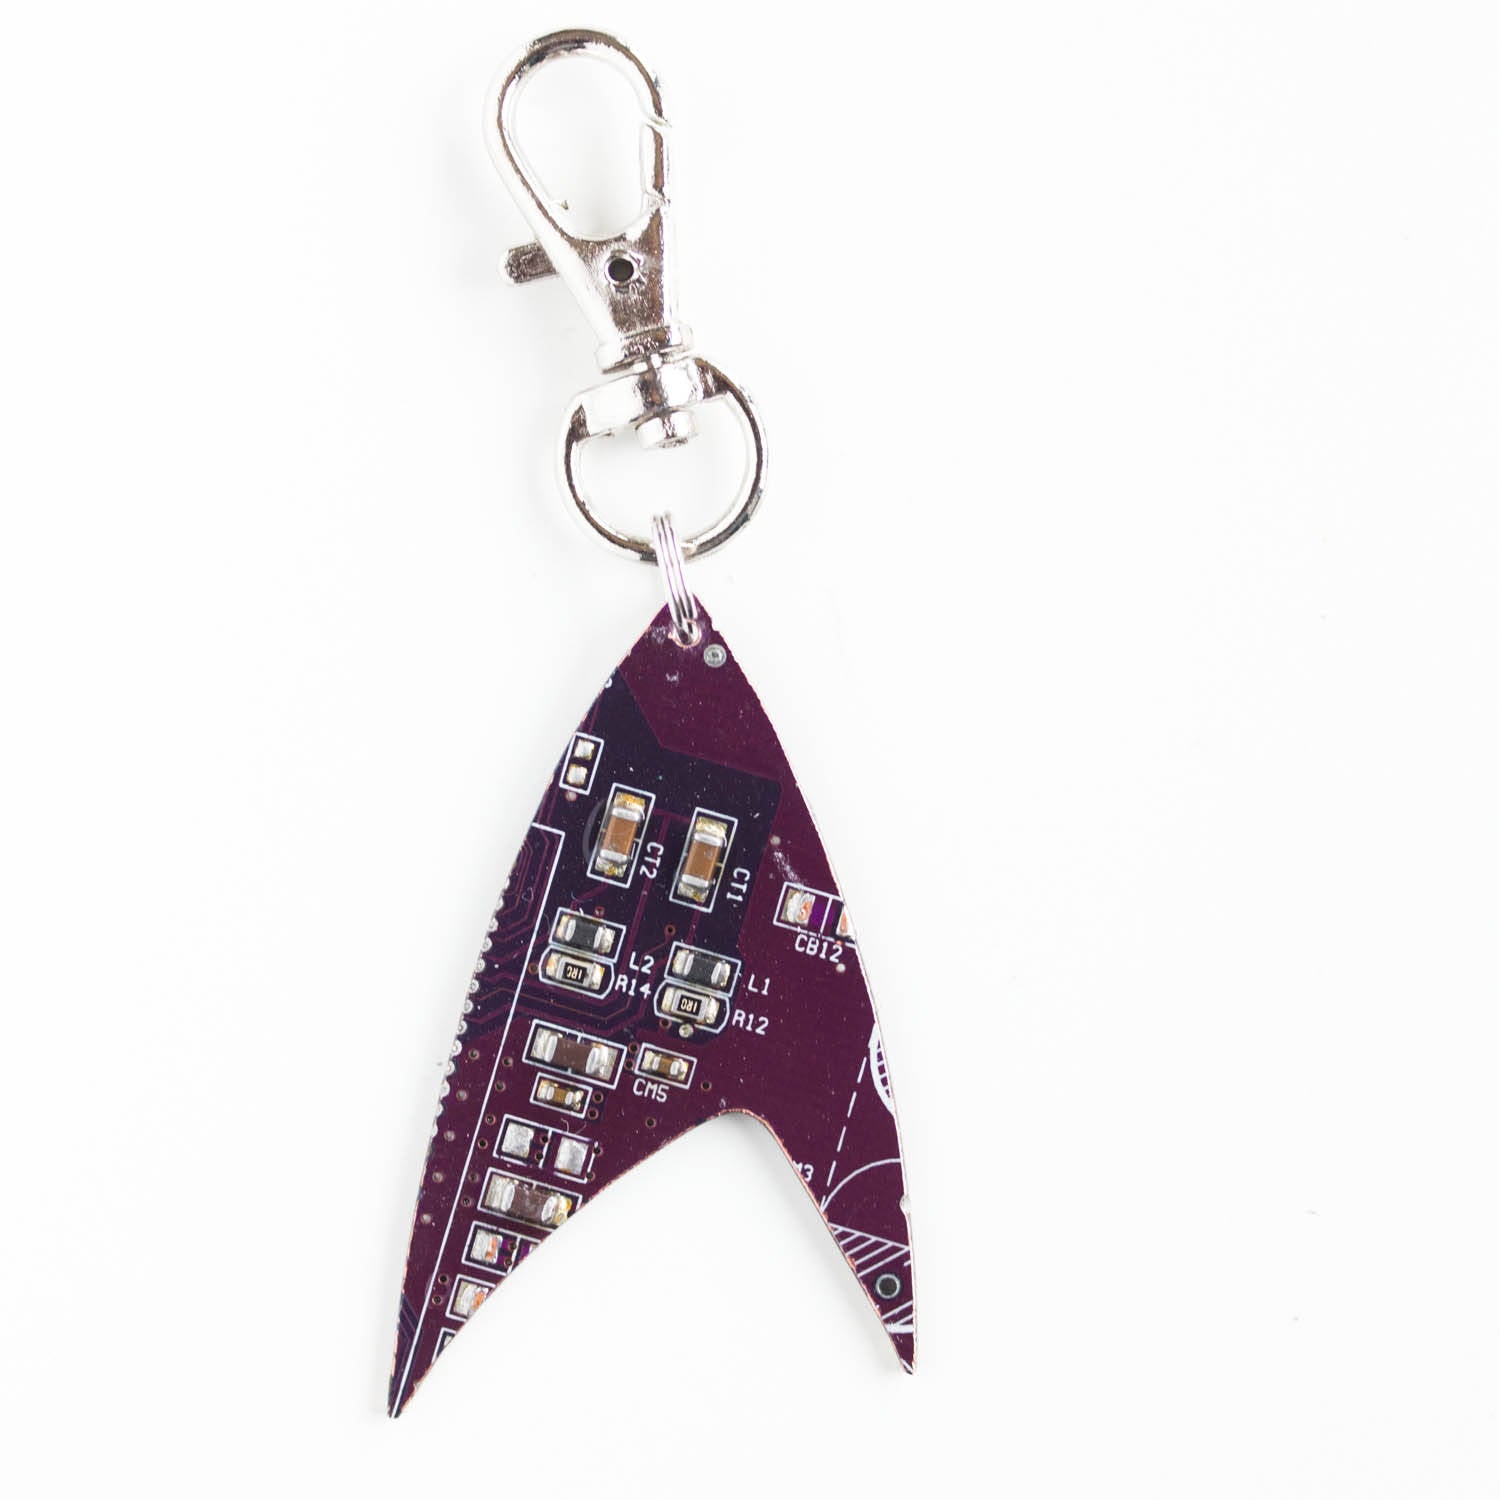 Star inspired keychain, Circuit board keychain or bag tag